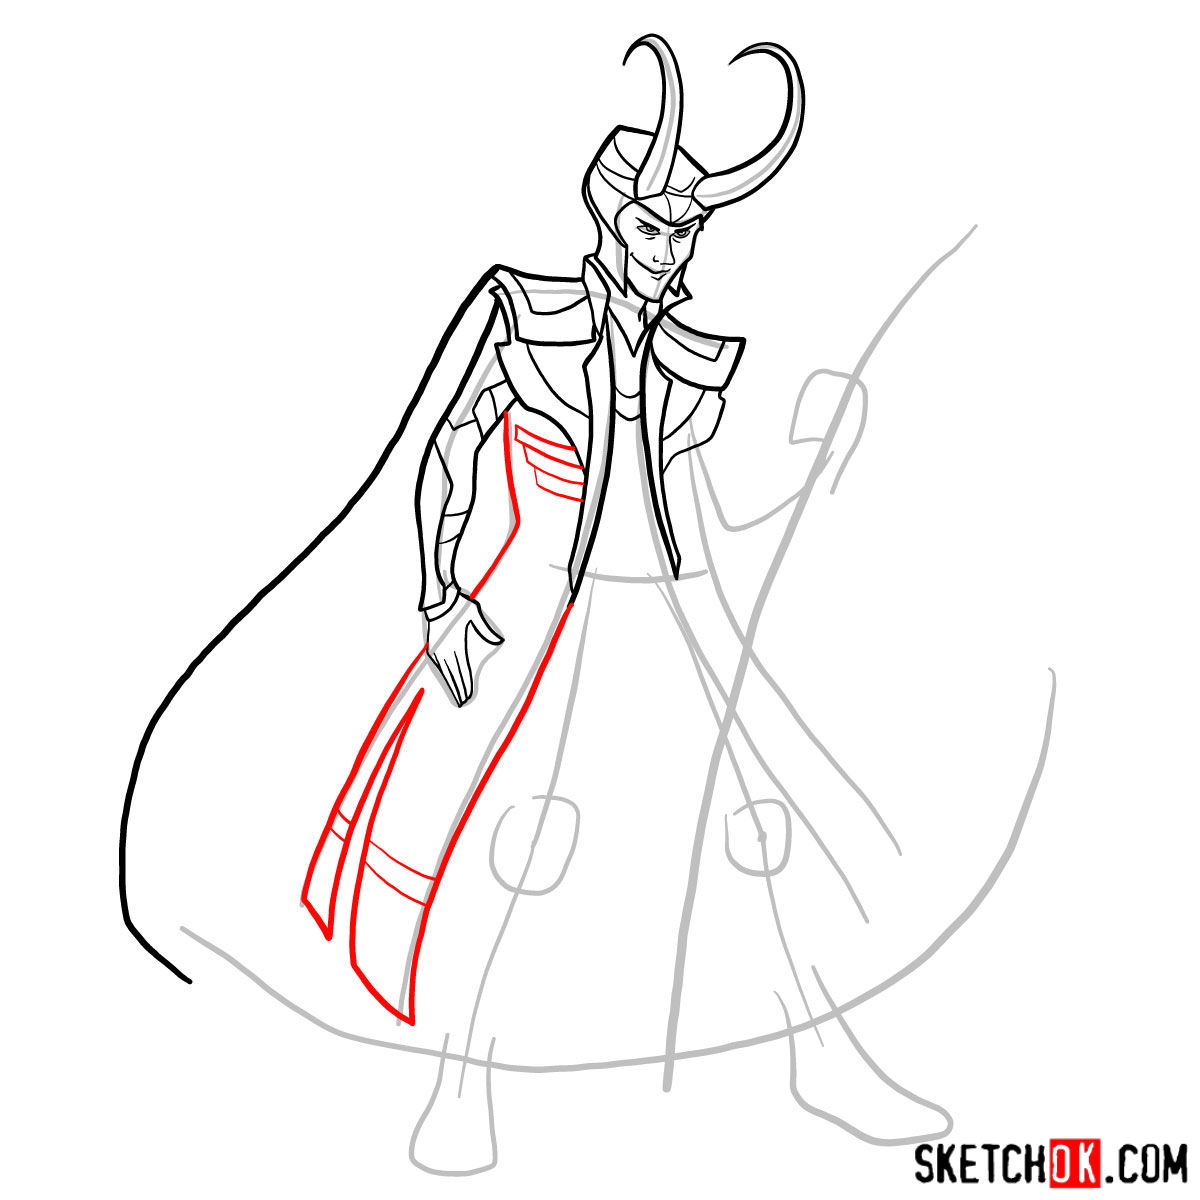 How to draw Loki - Marvel Comics villian - step 10